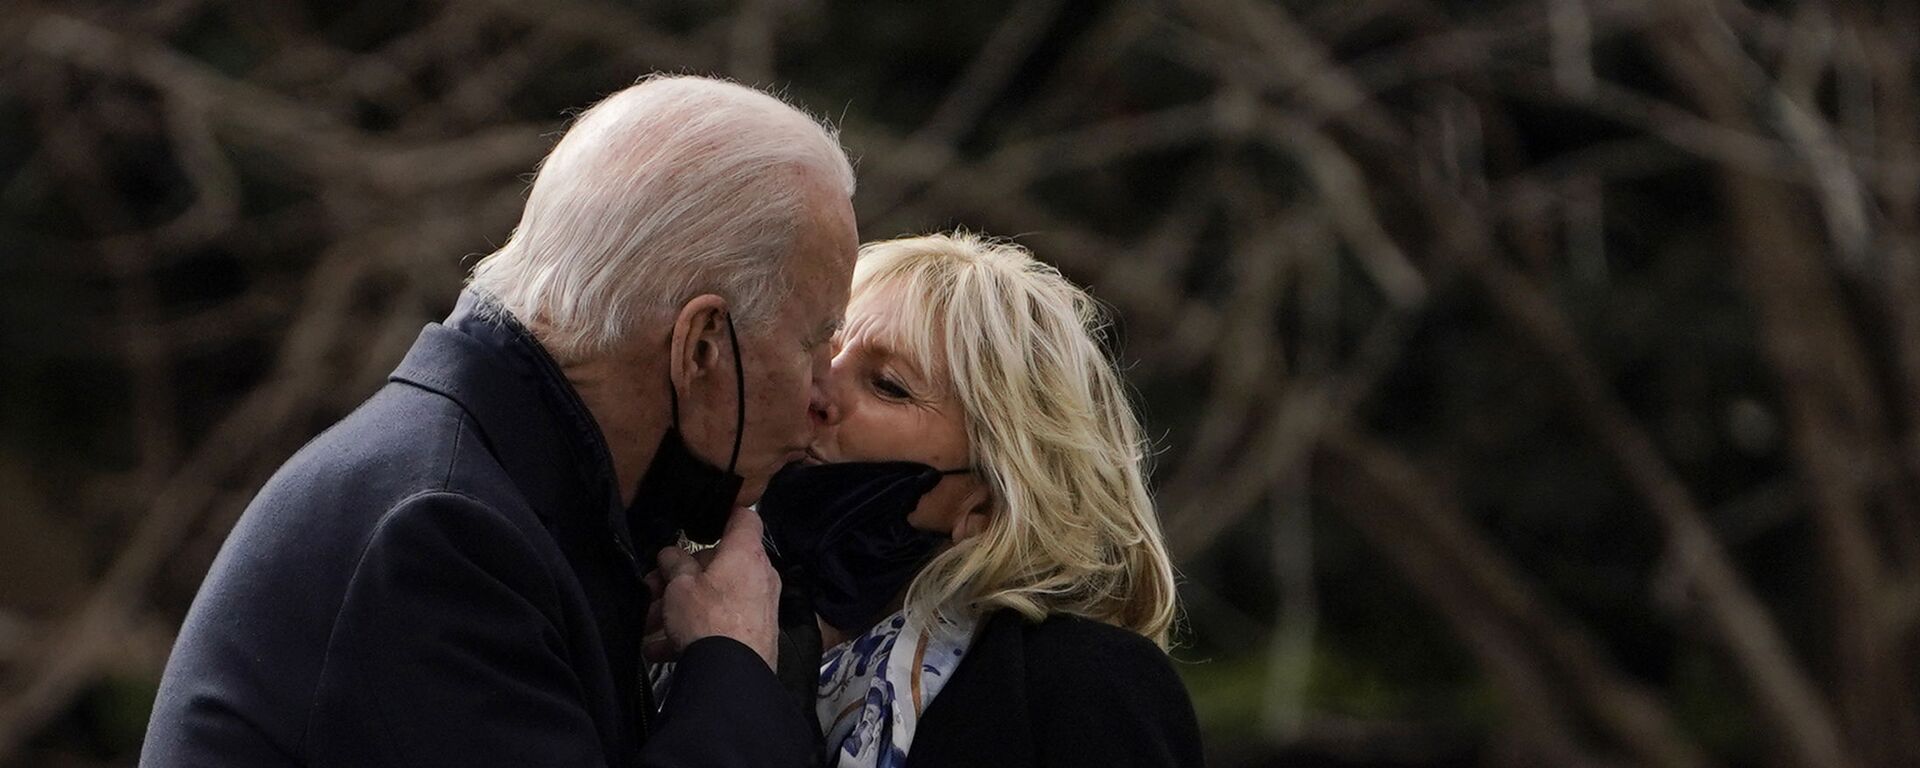 Joe Biden, presidente de EEUU, se besa con su esposa, Jill Biden (archivo) - Sputnik Mundo, 1920, 18.10.2021